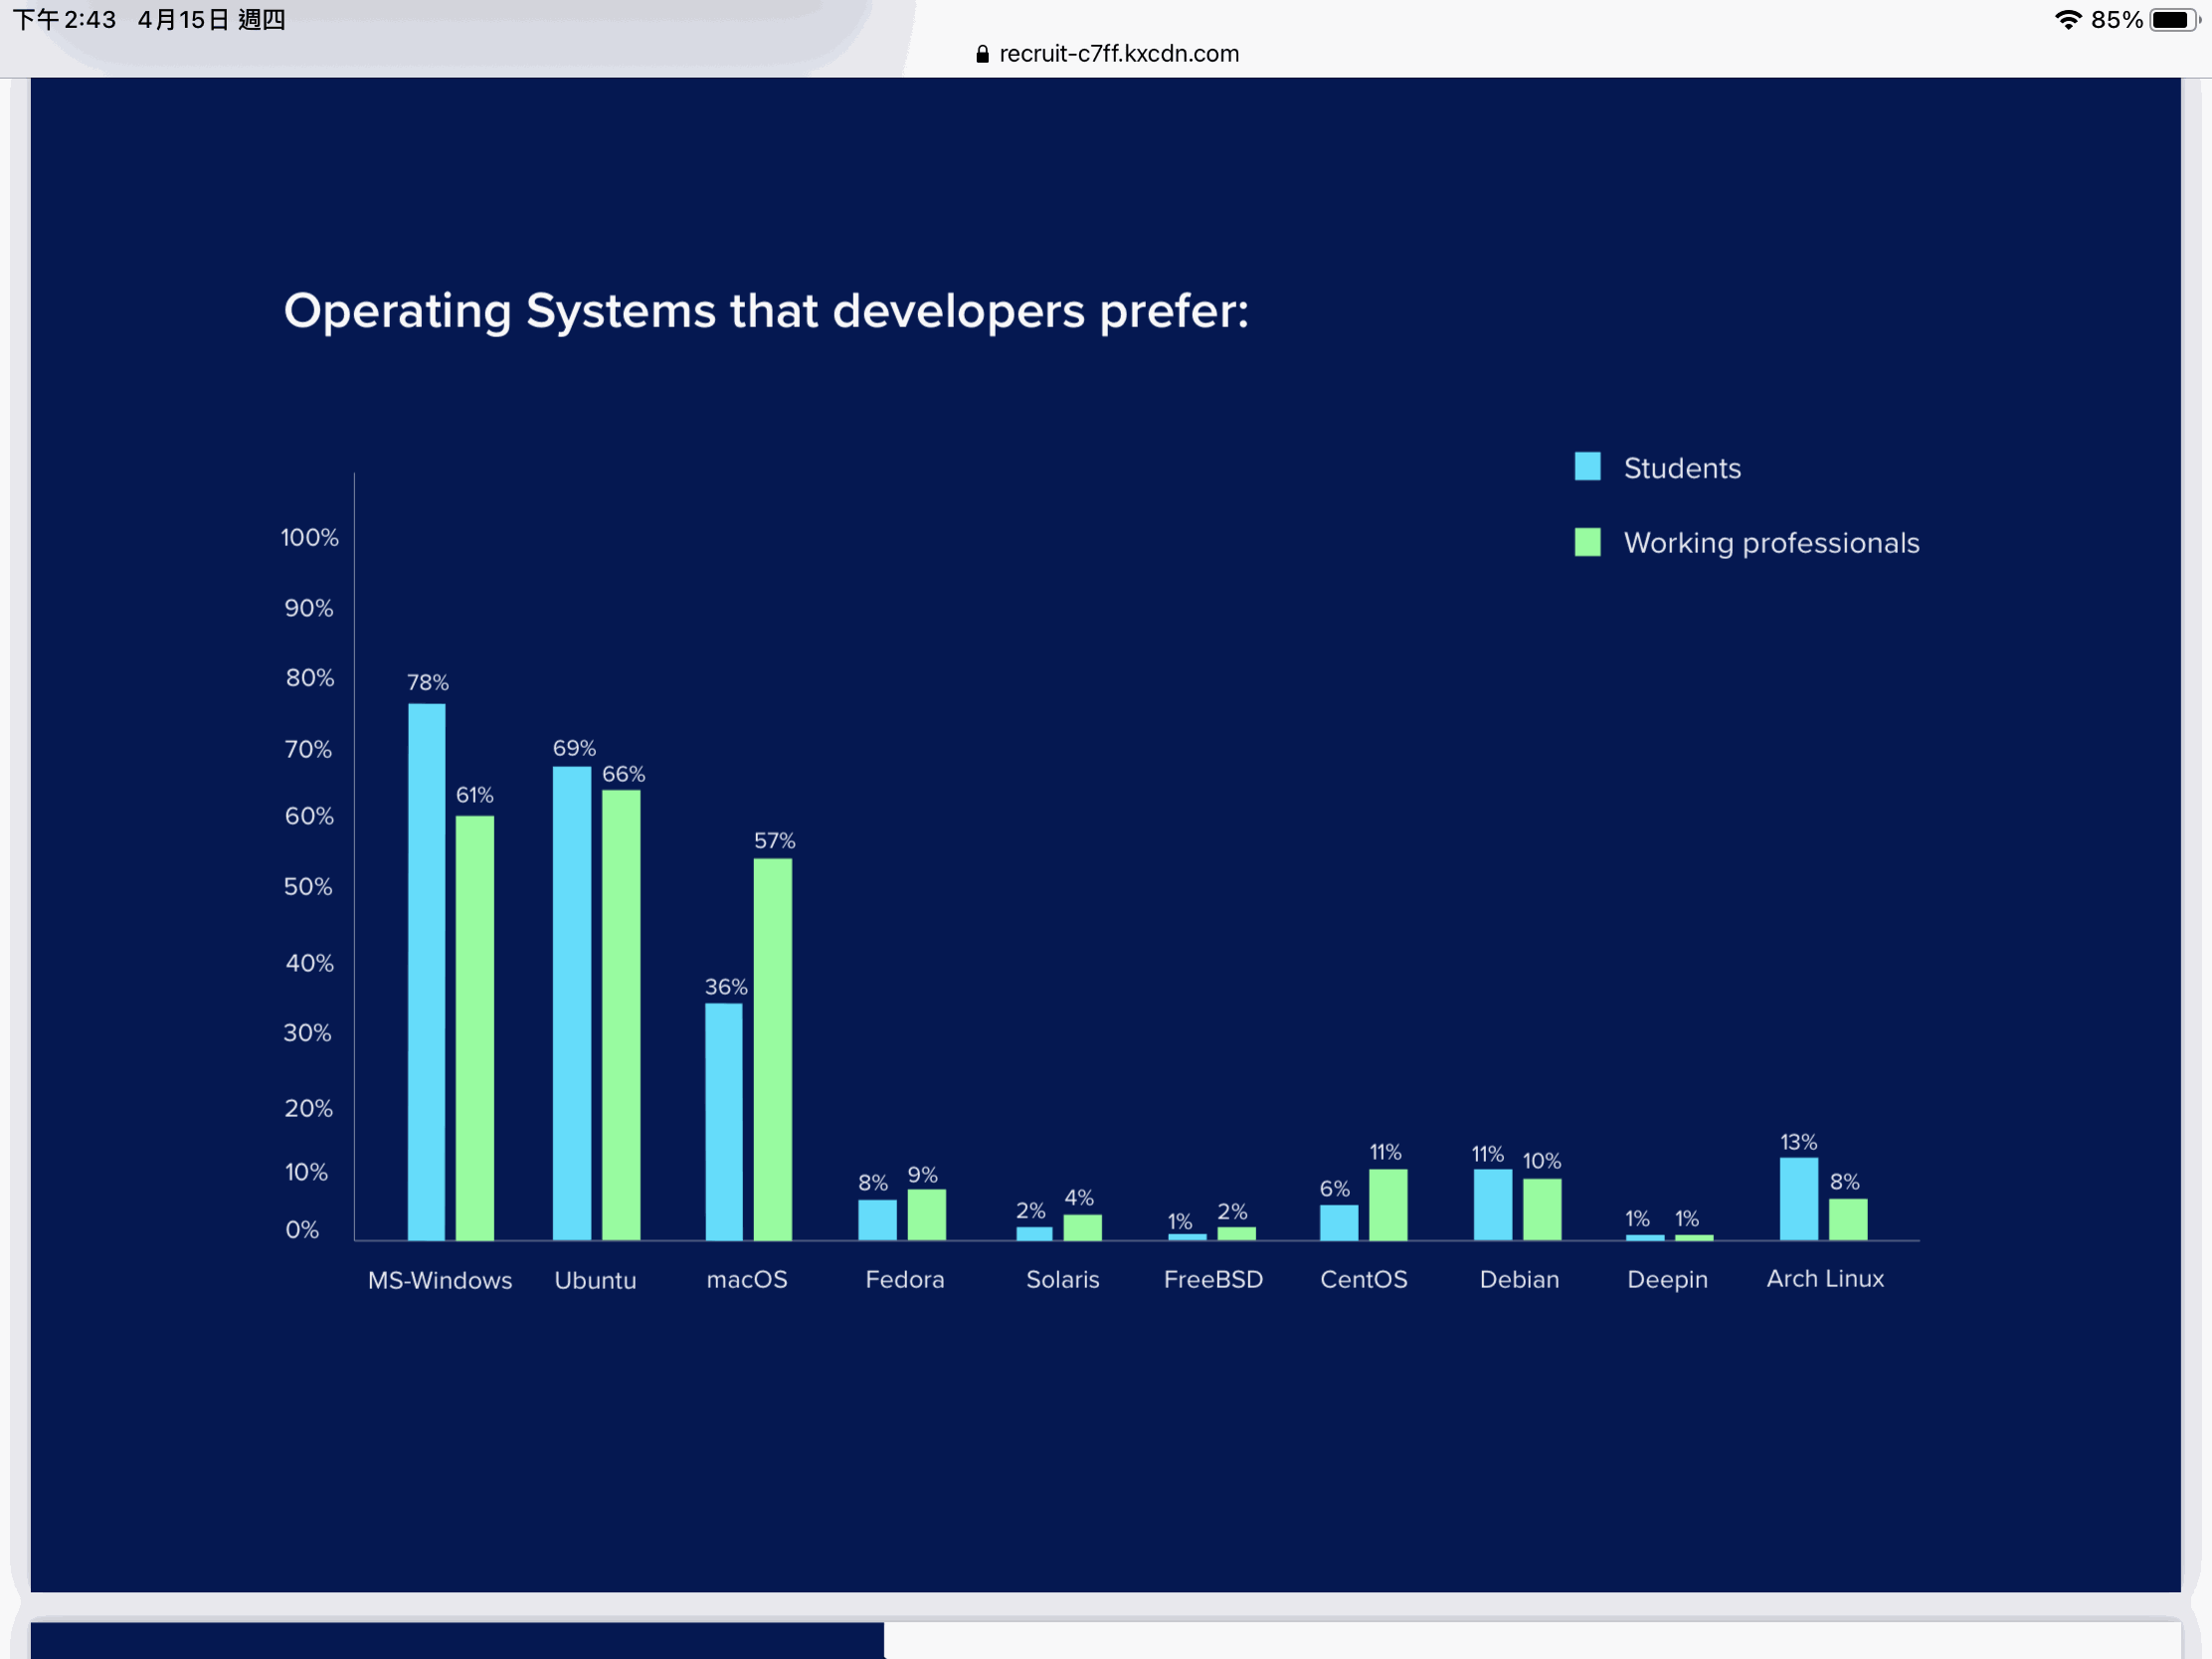 HackerEarth 統計在75個國家約 16000+ 個專業開發者所使用的作業系統以 Ubuntu Linux 最多，還勝過 Windows及MacOS